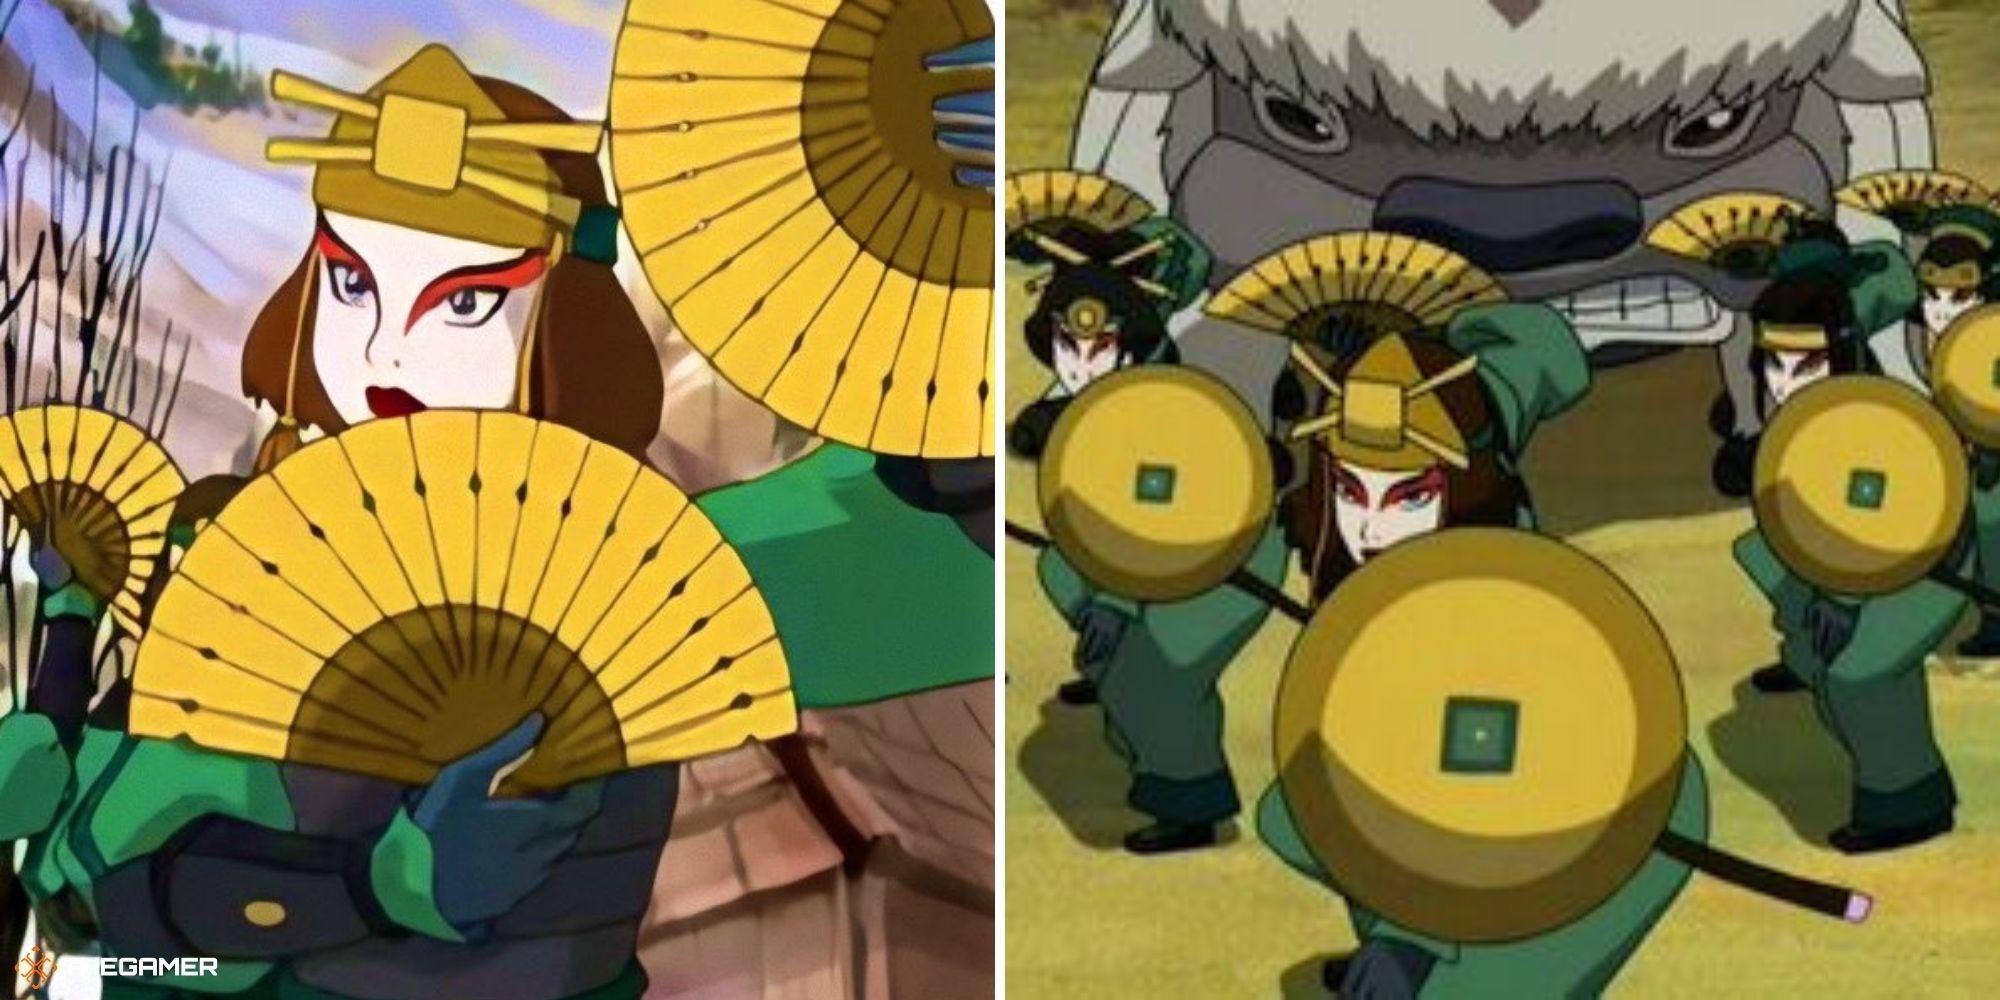 Avatar the last airbender - Suki and the Kyoshi warriors